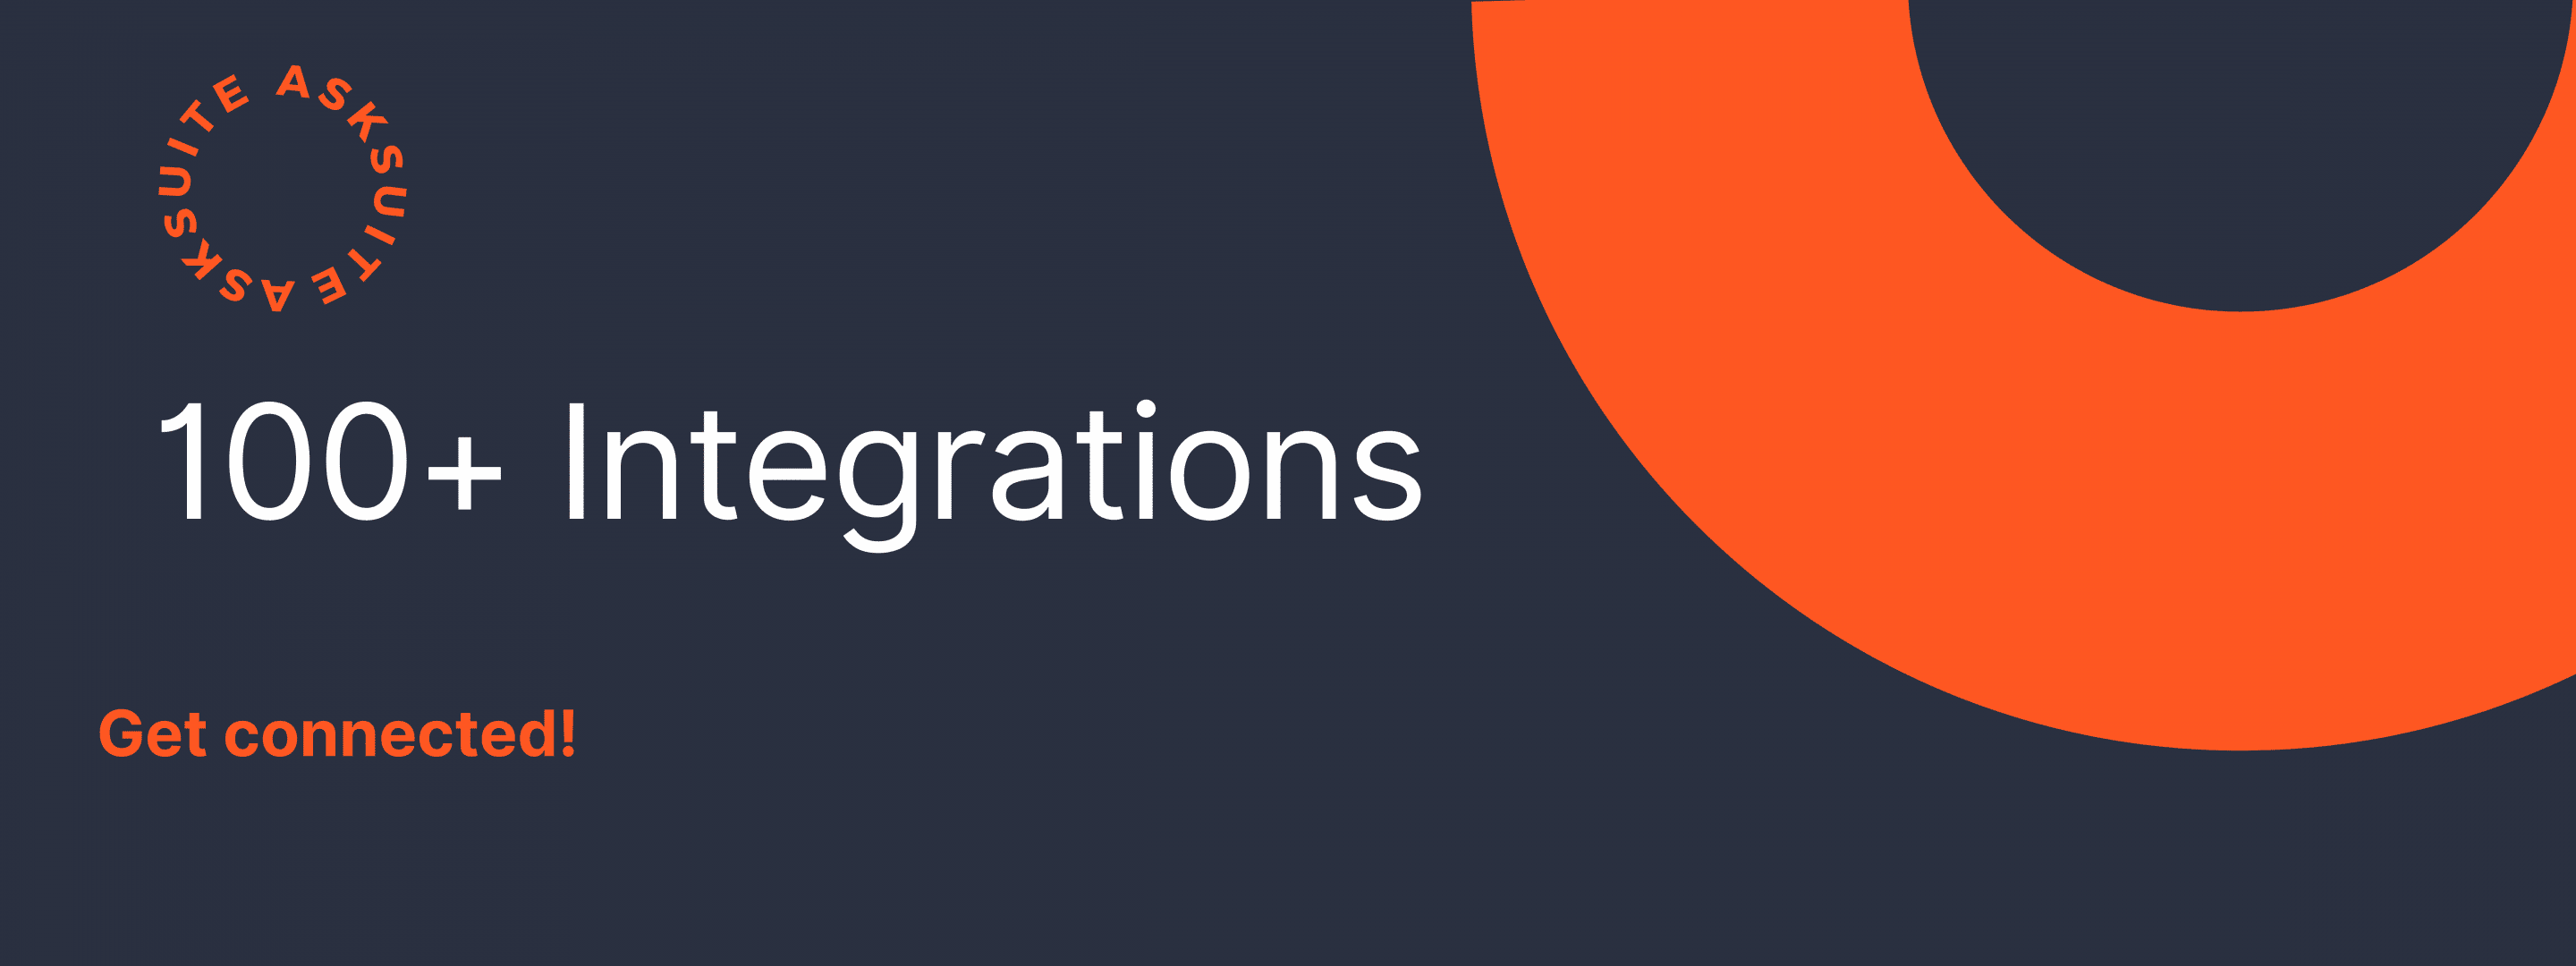 integrations banner